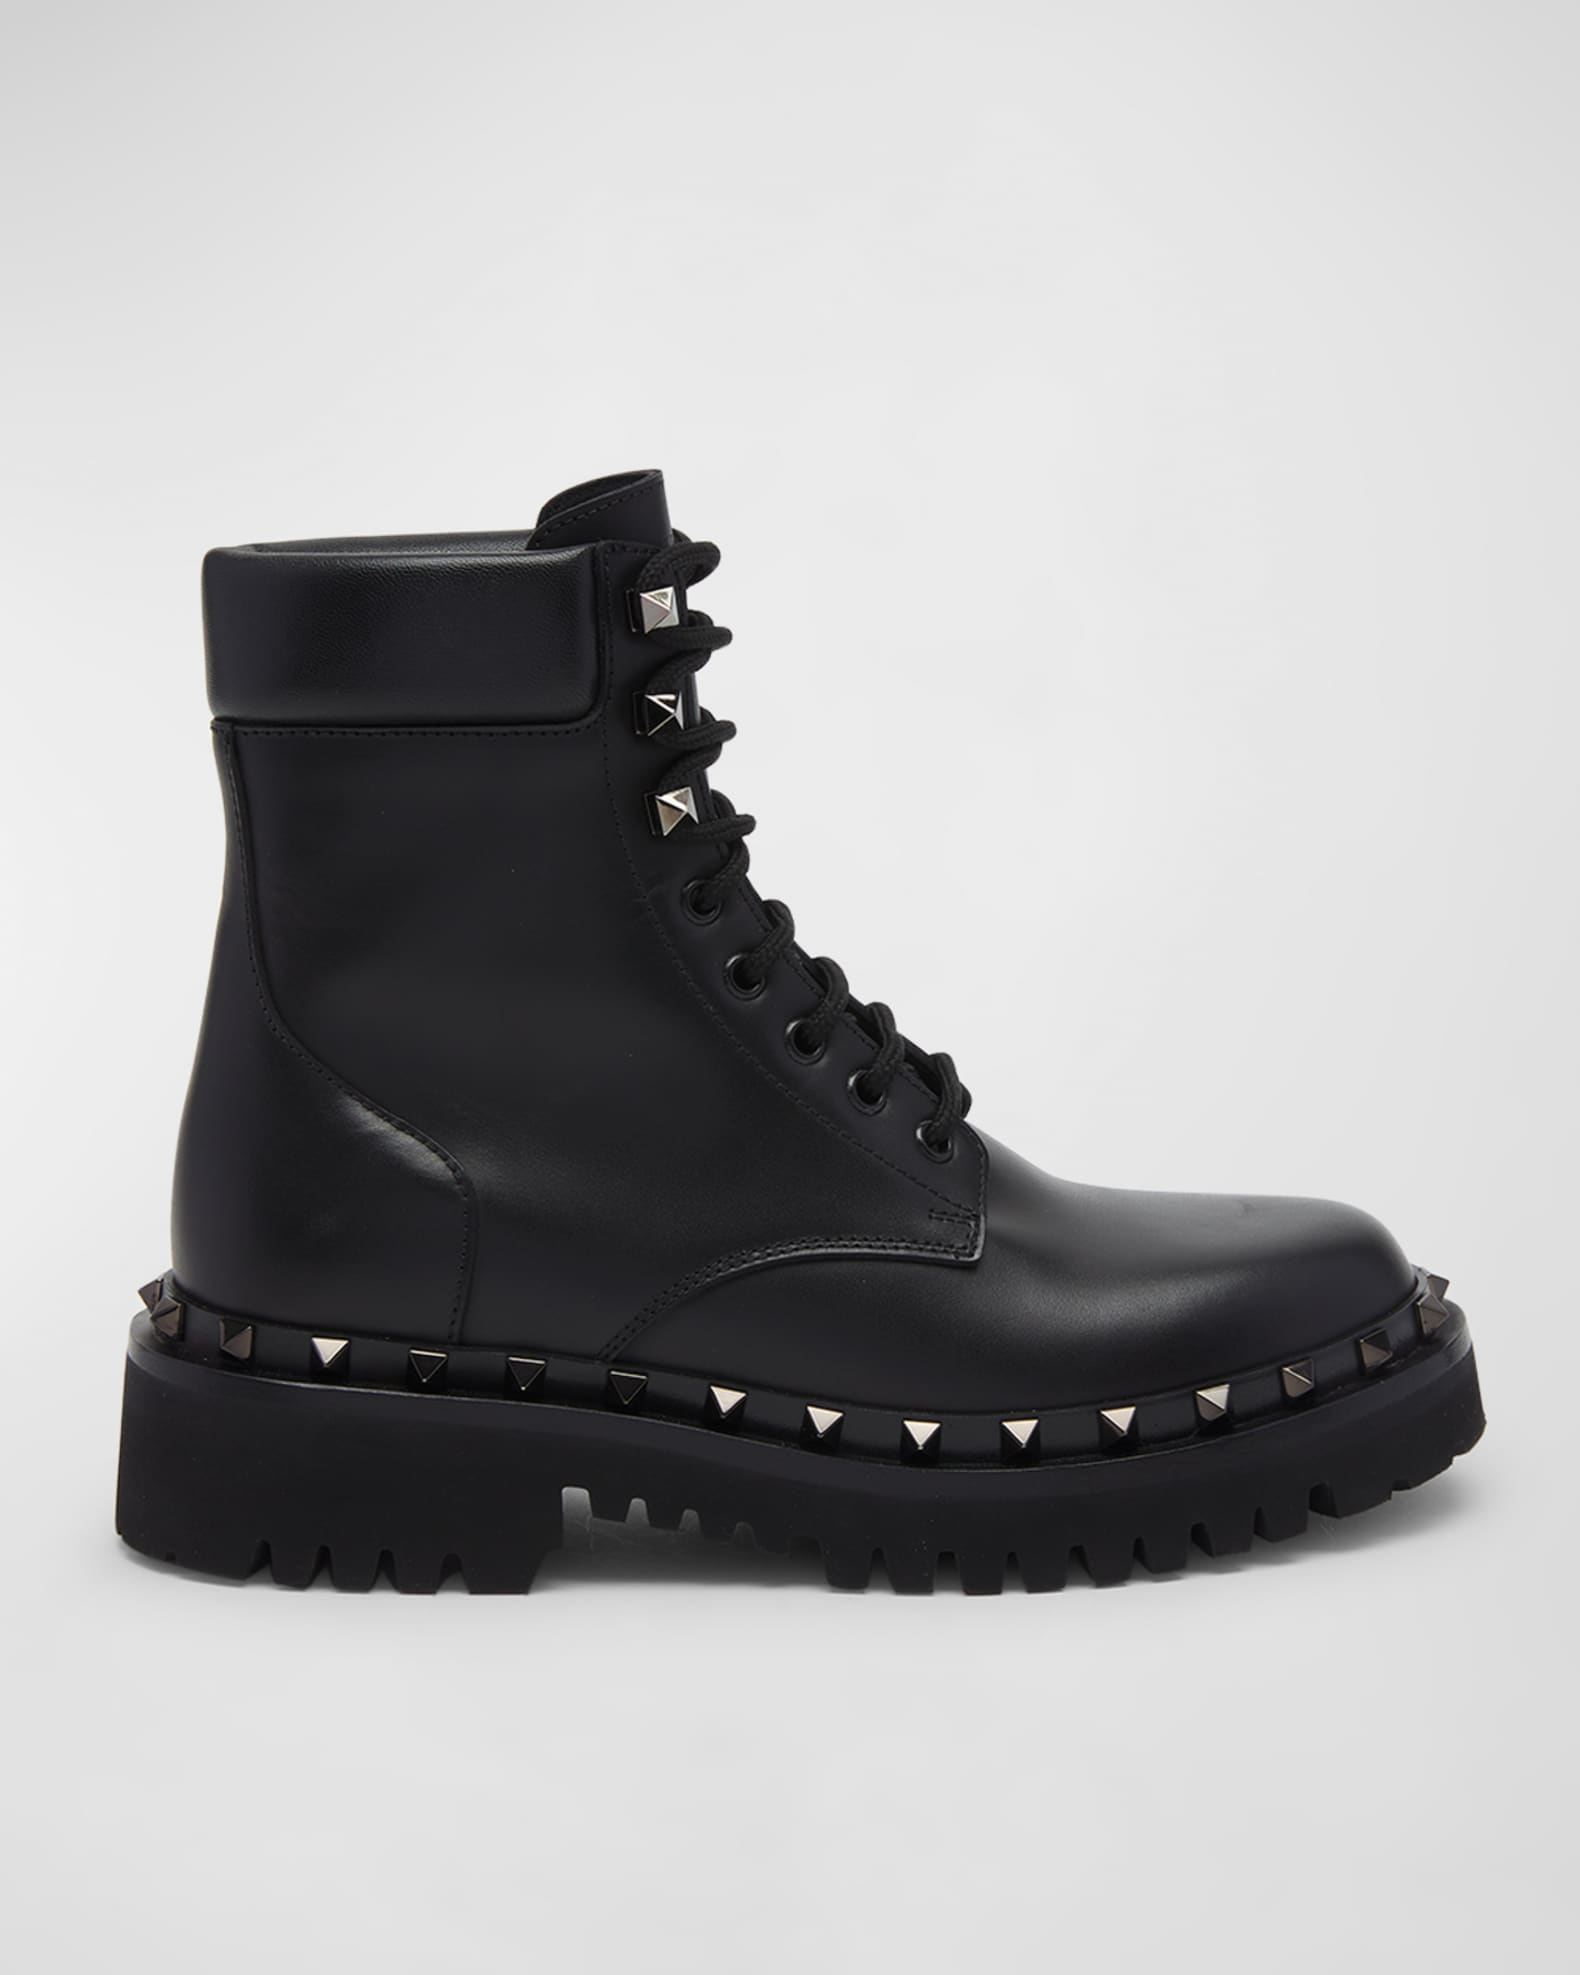 Valentino Garavani Rockstud Leather Combat Boots | Neiman Marcus